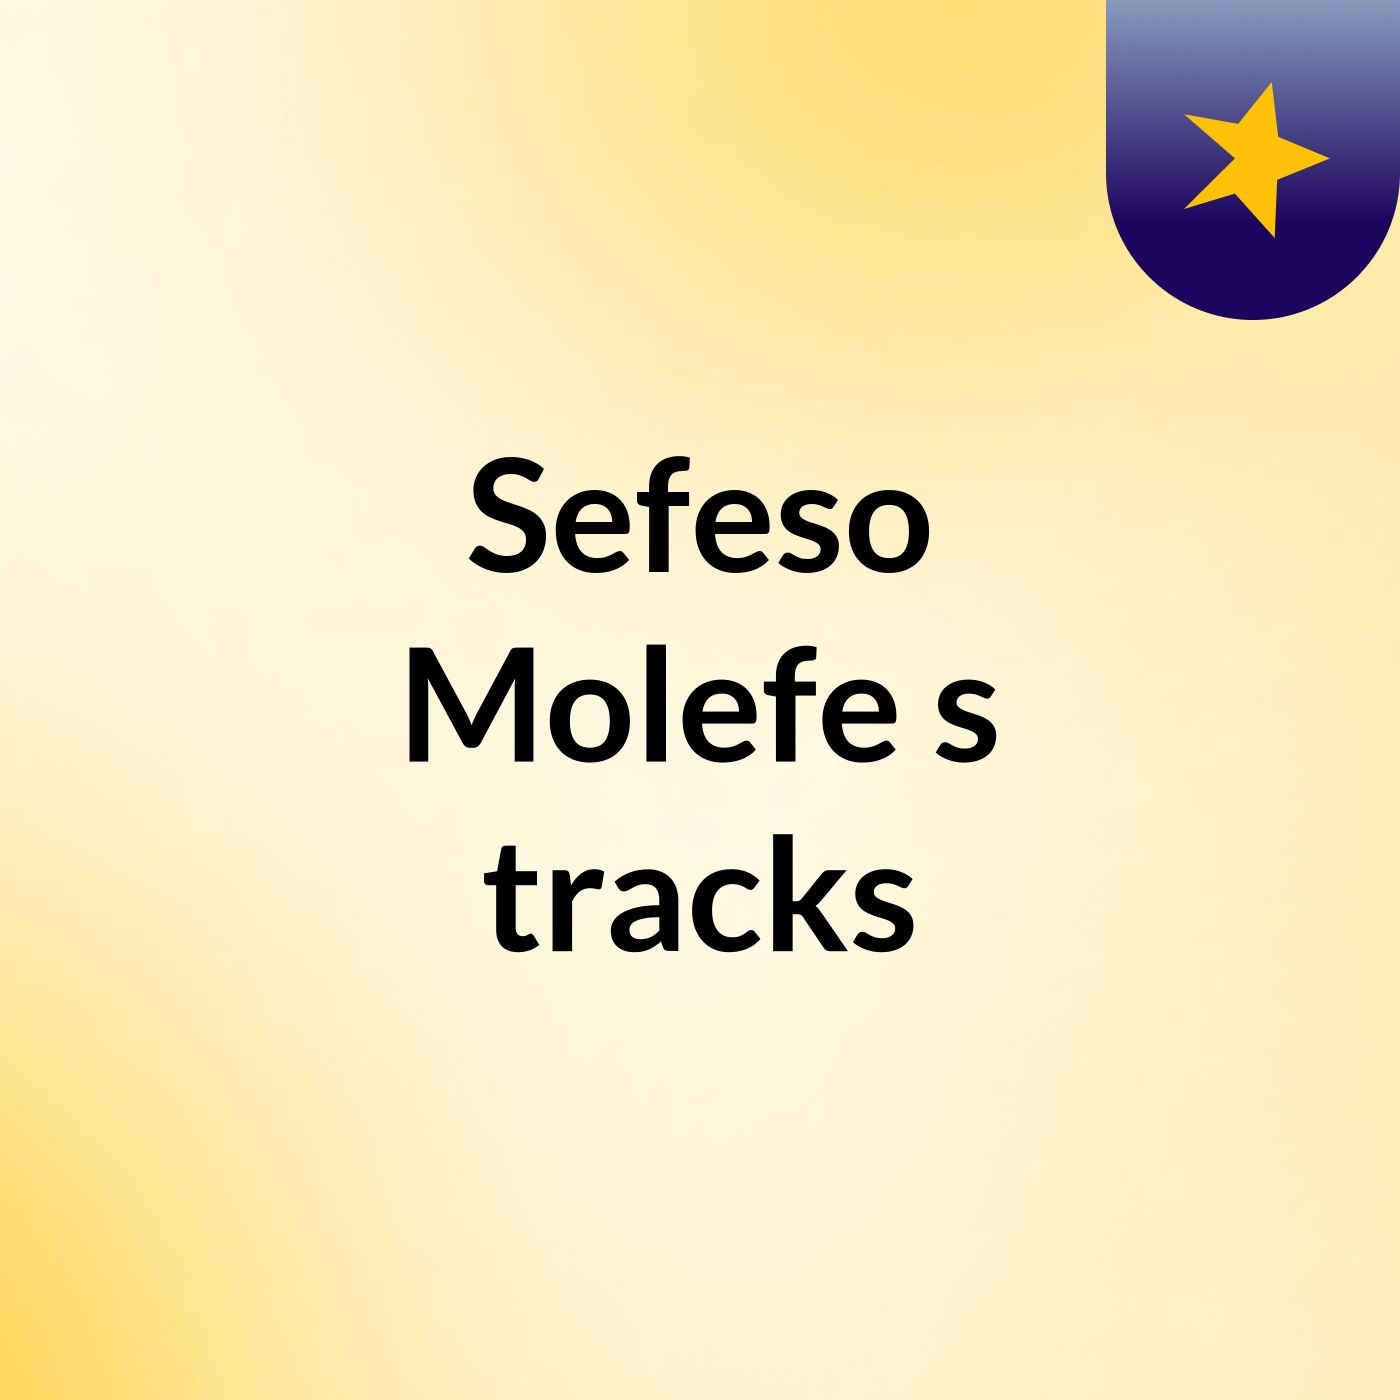 Episode 31 - Sefeso Molefe's tracks